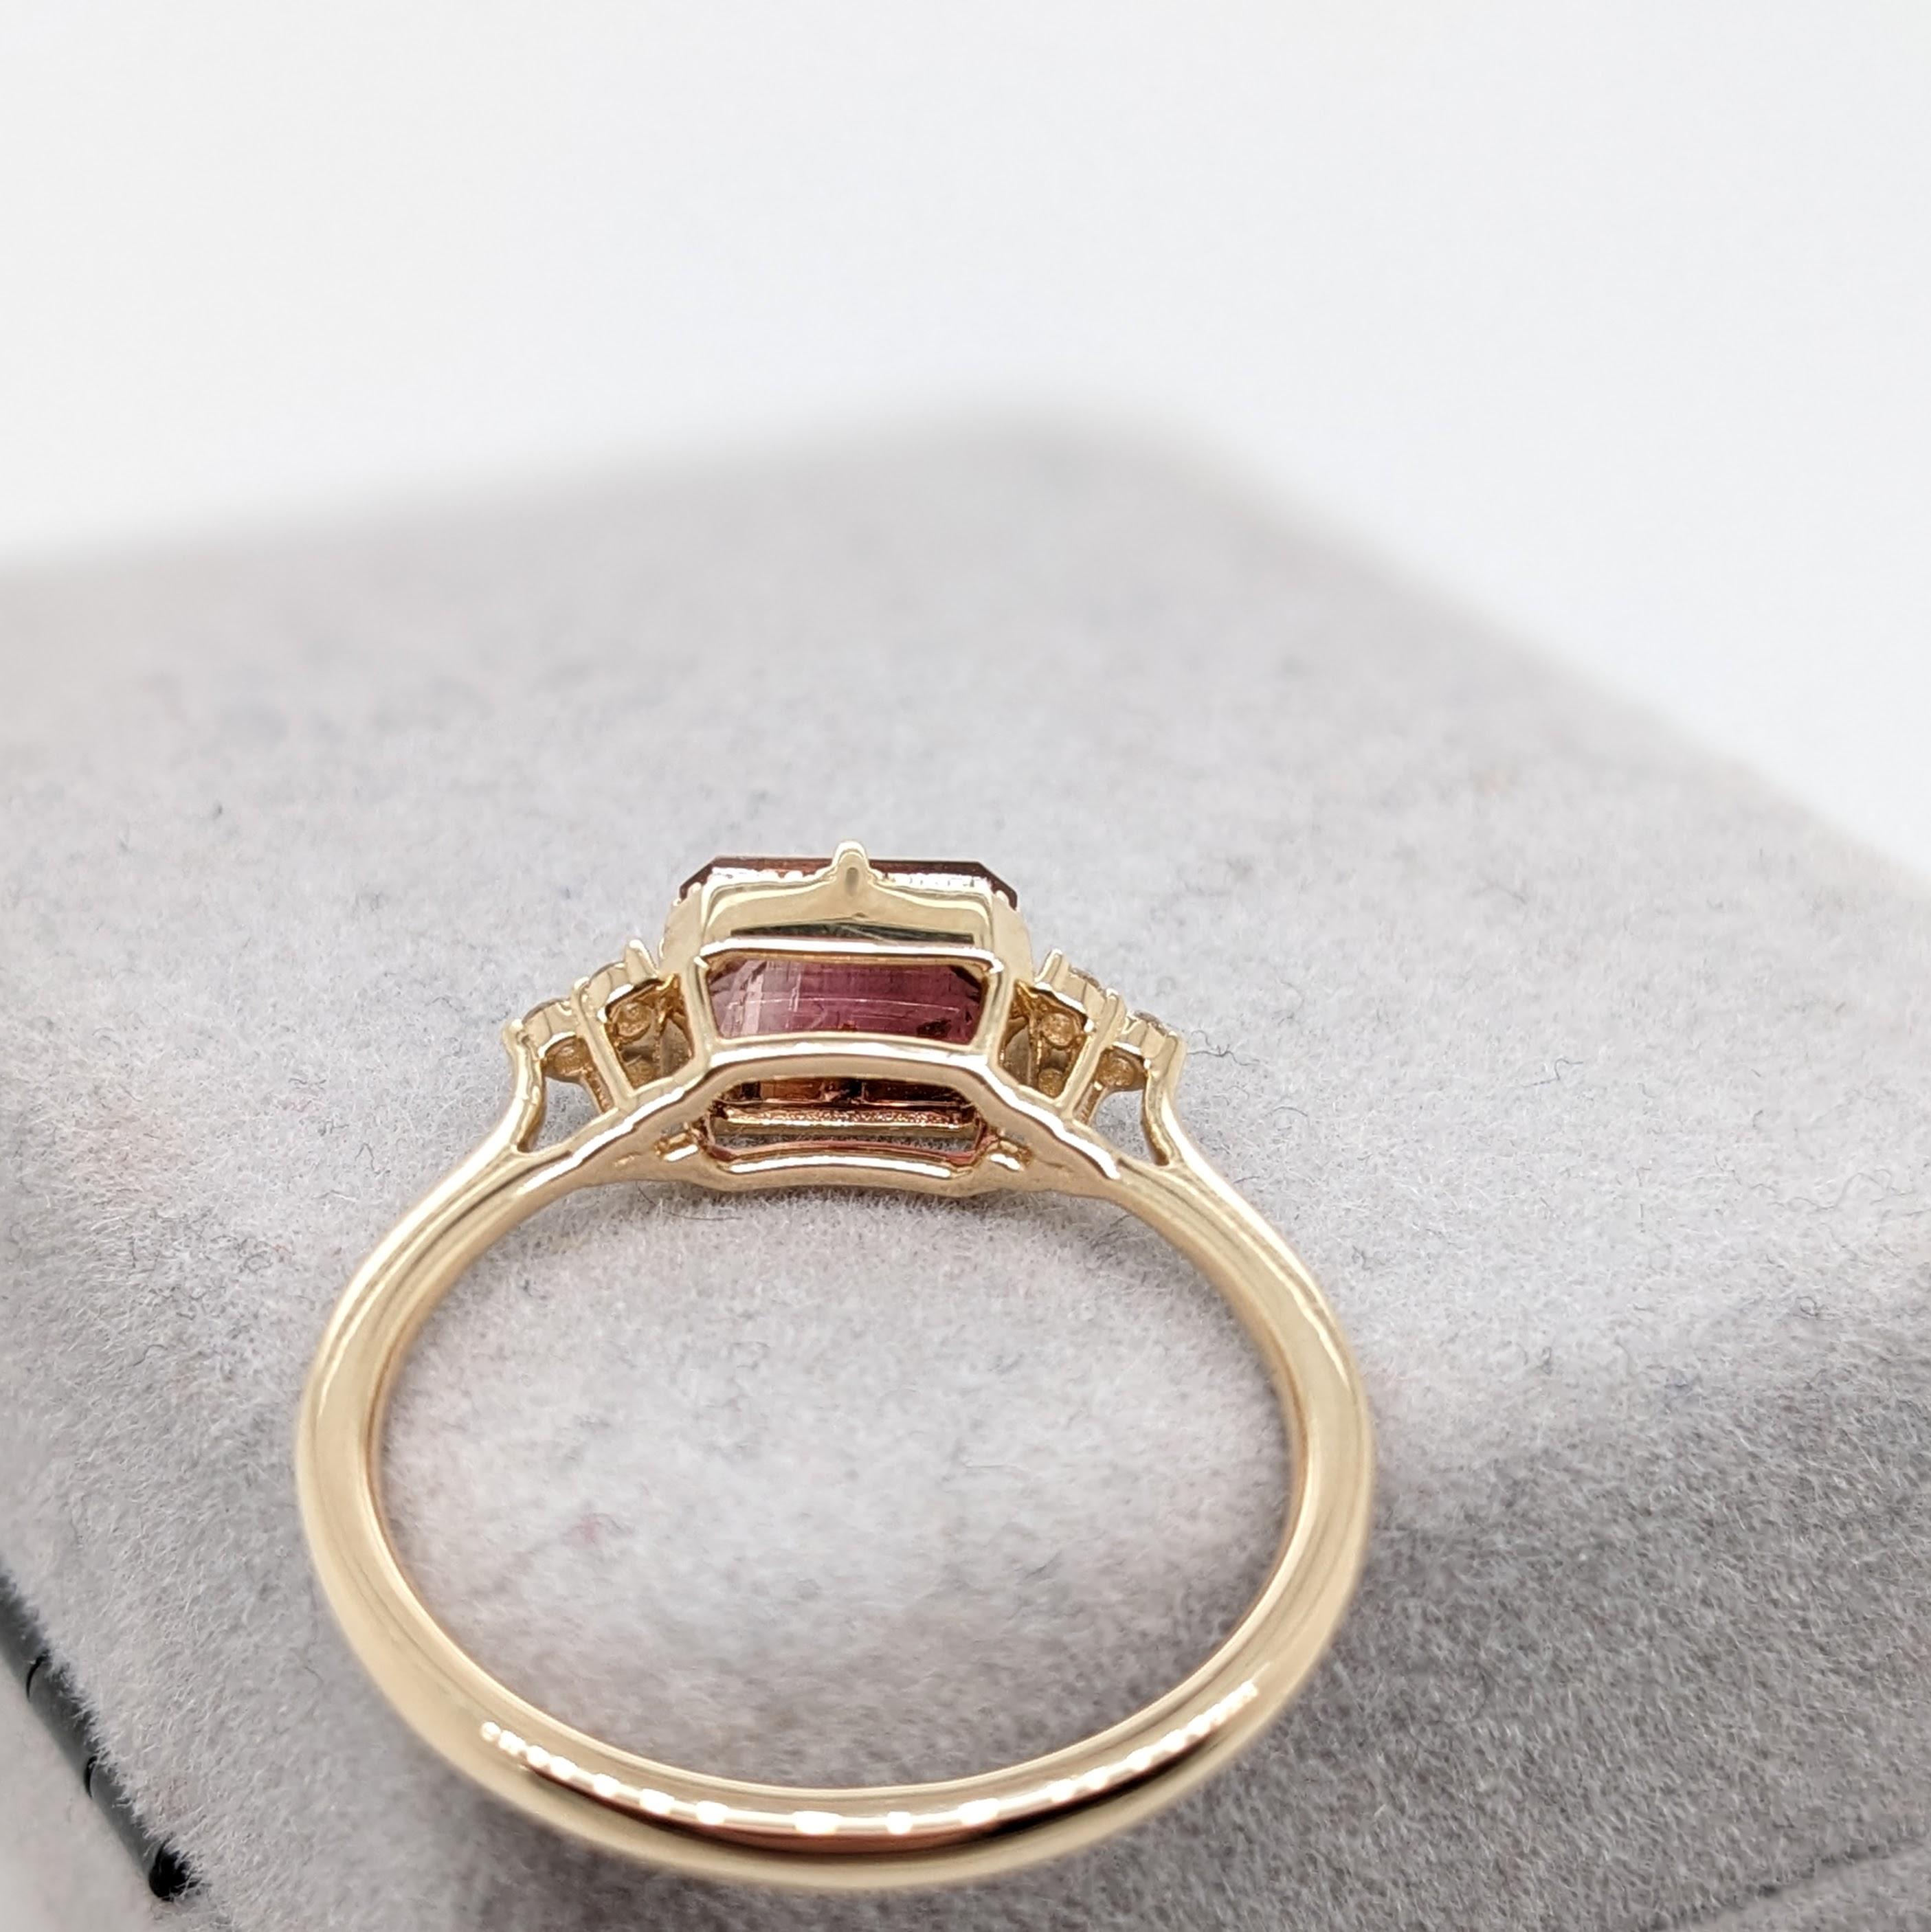 Women's Bi-color Tourmaline Ring w Diamond Accents in Solid 14K Gold Emerald Cut 5x7mm